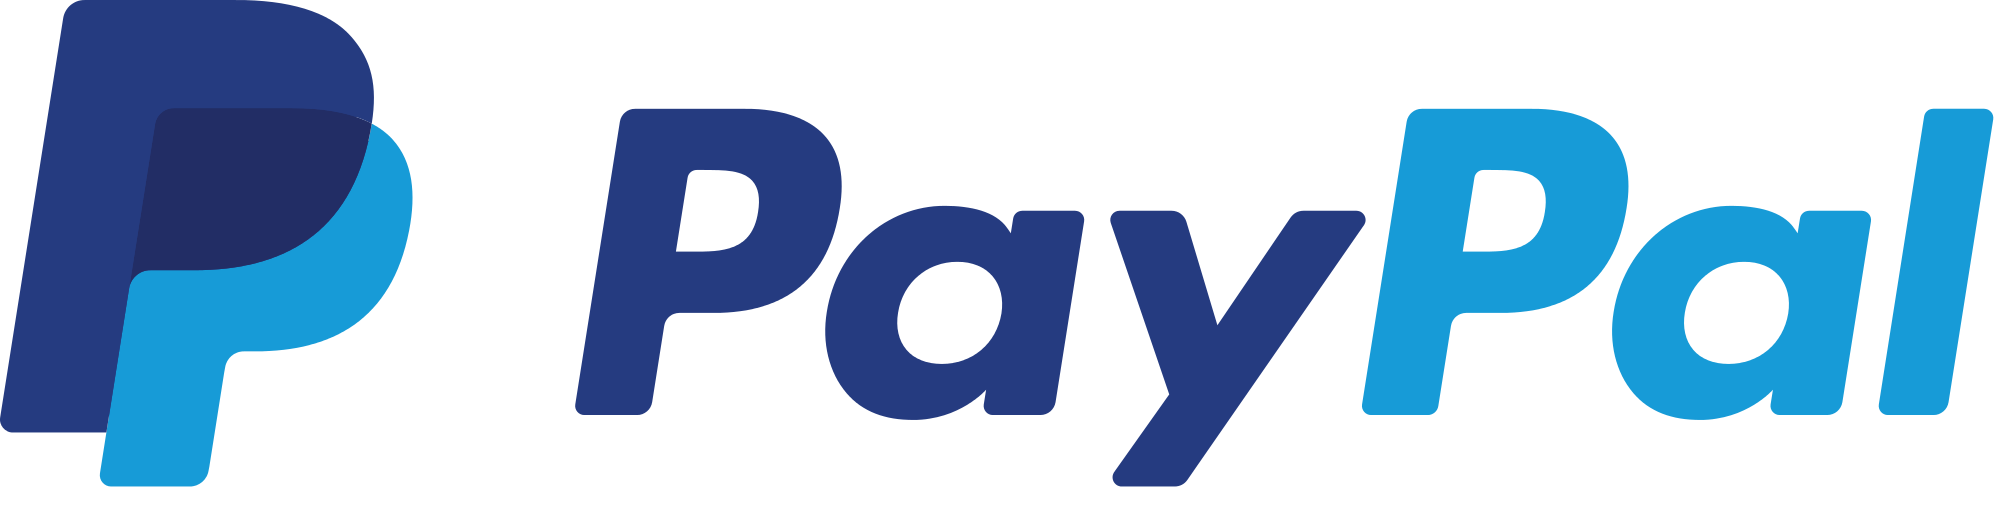 Paypal em Portugal